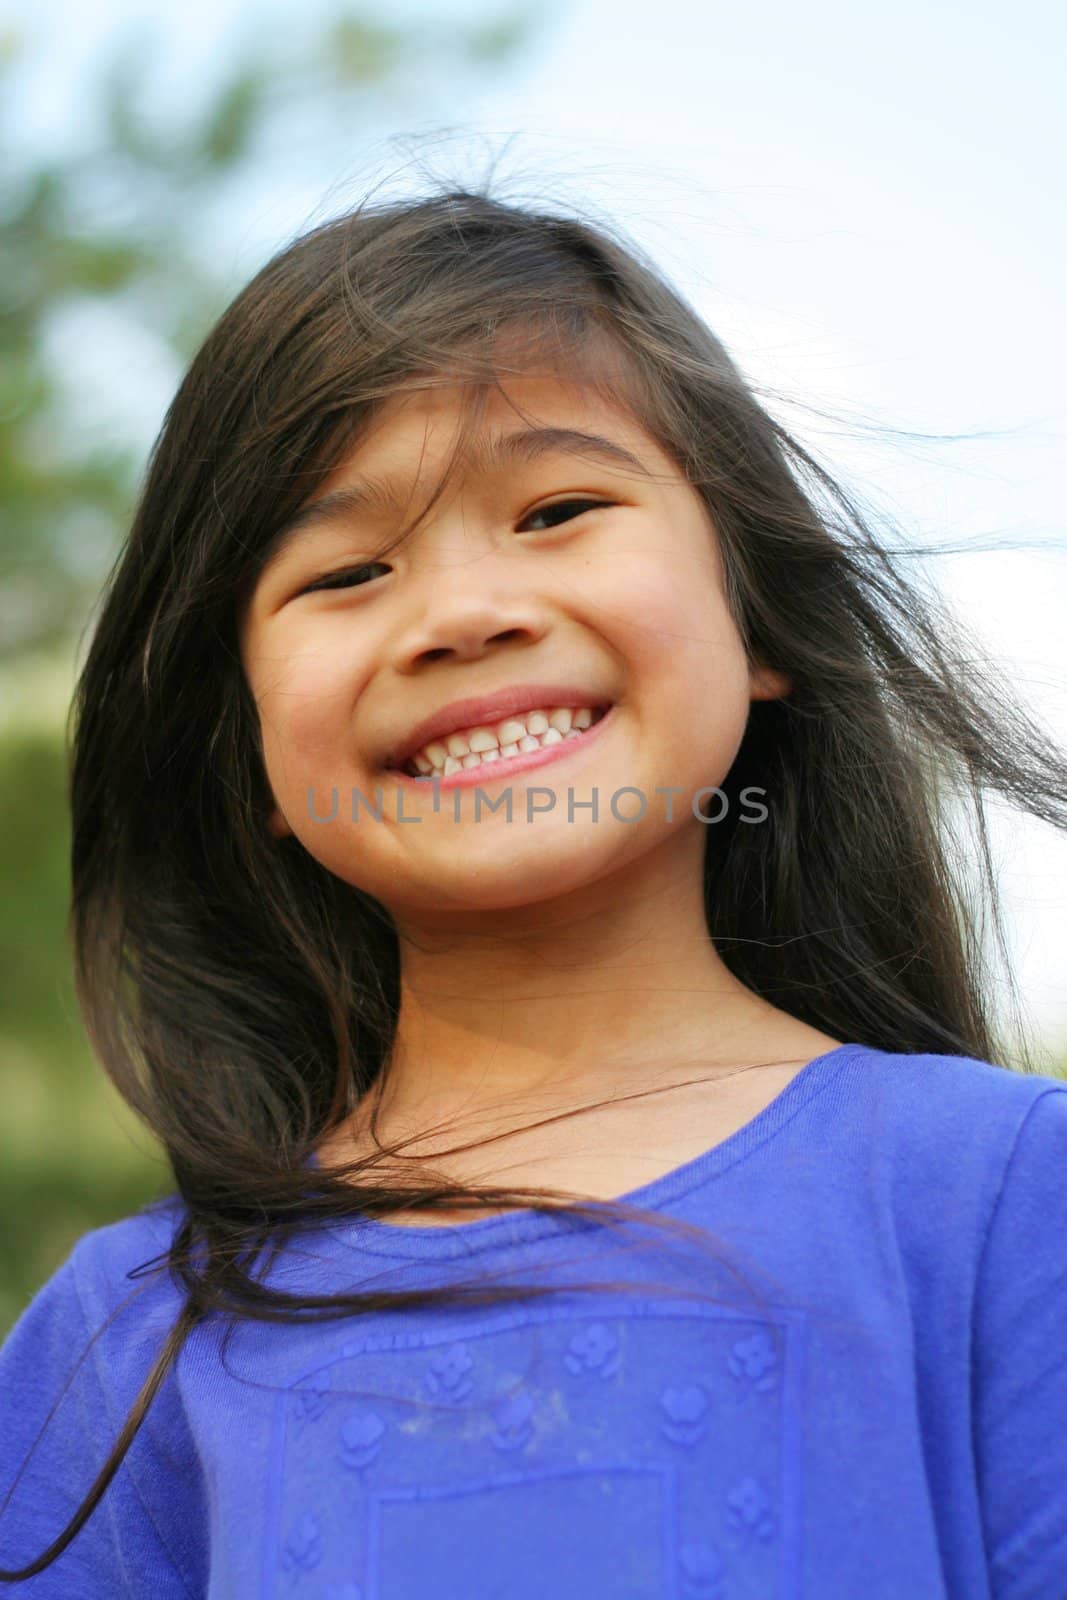 Sweet six year old girl smiling wide , part Scandinavian,asian descent